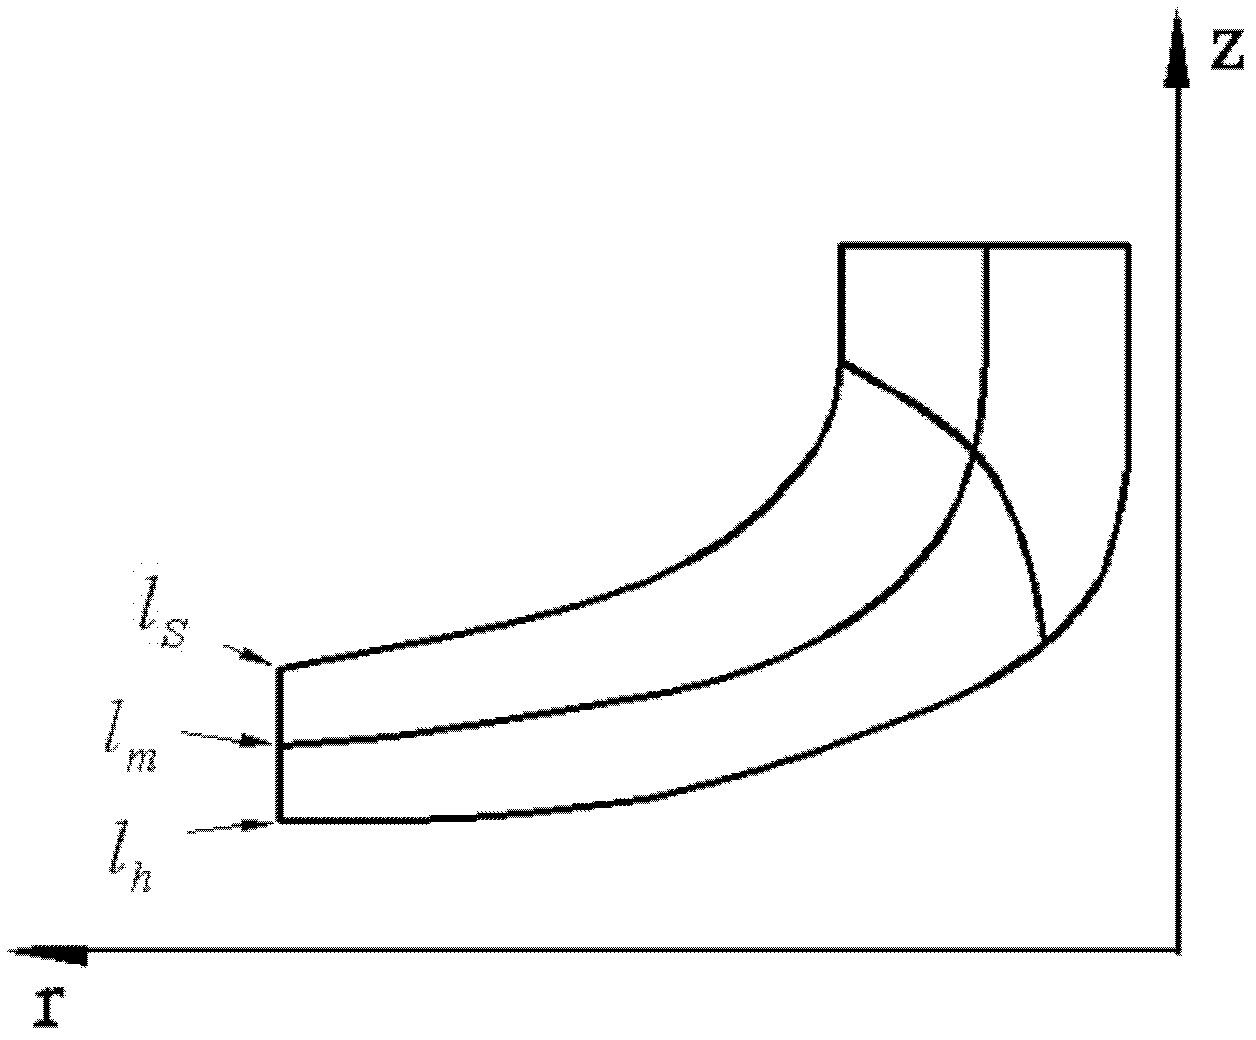 Optimization design method of impellor for cavitation-erosion-resistant centrifugal fan